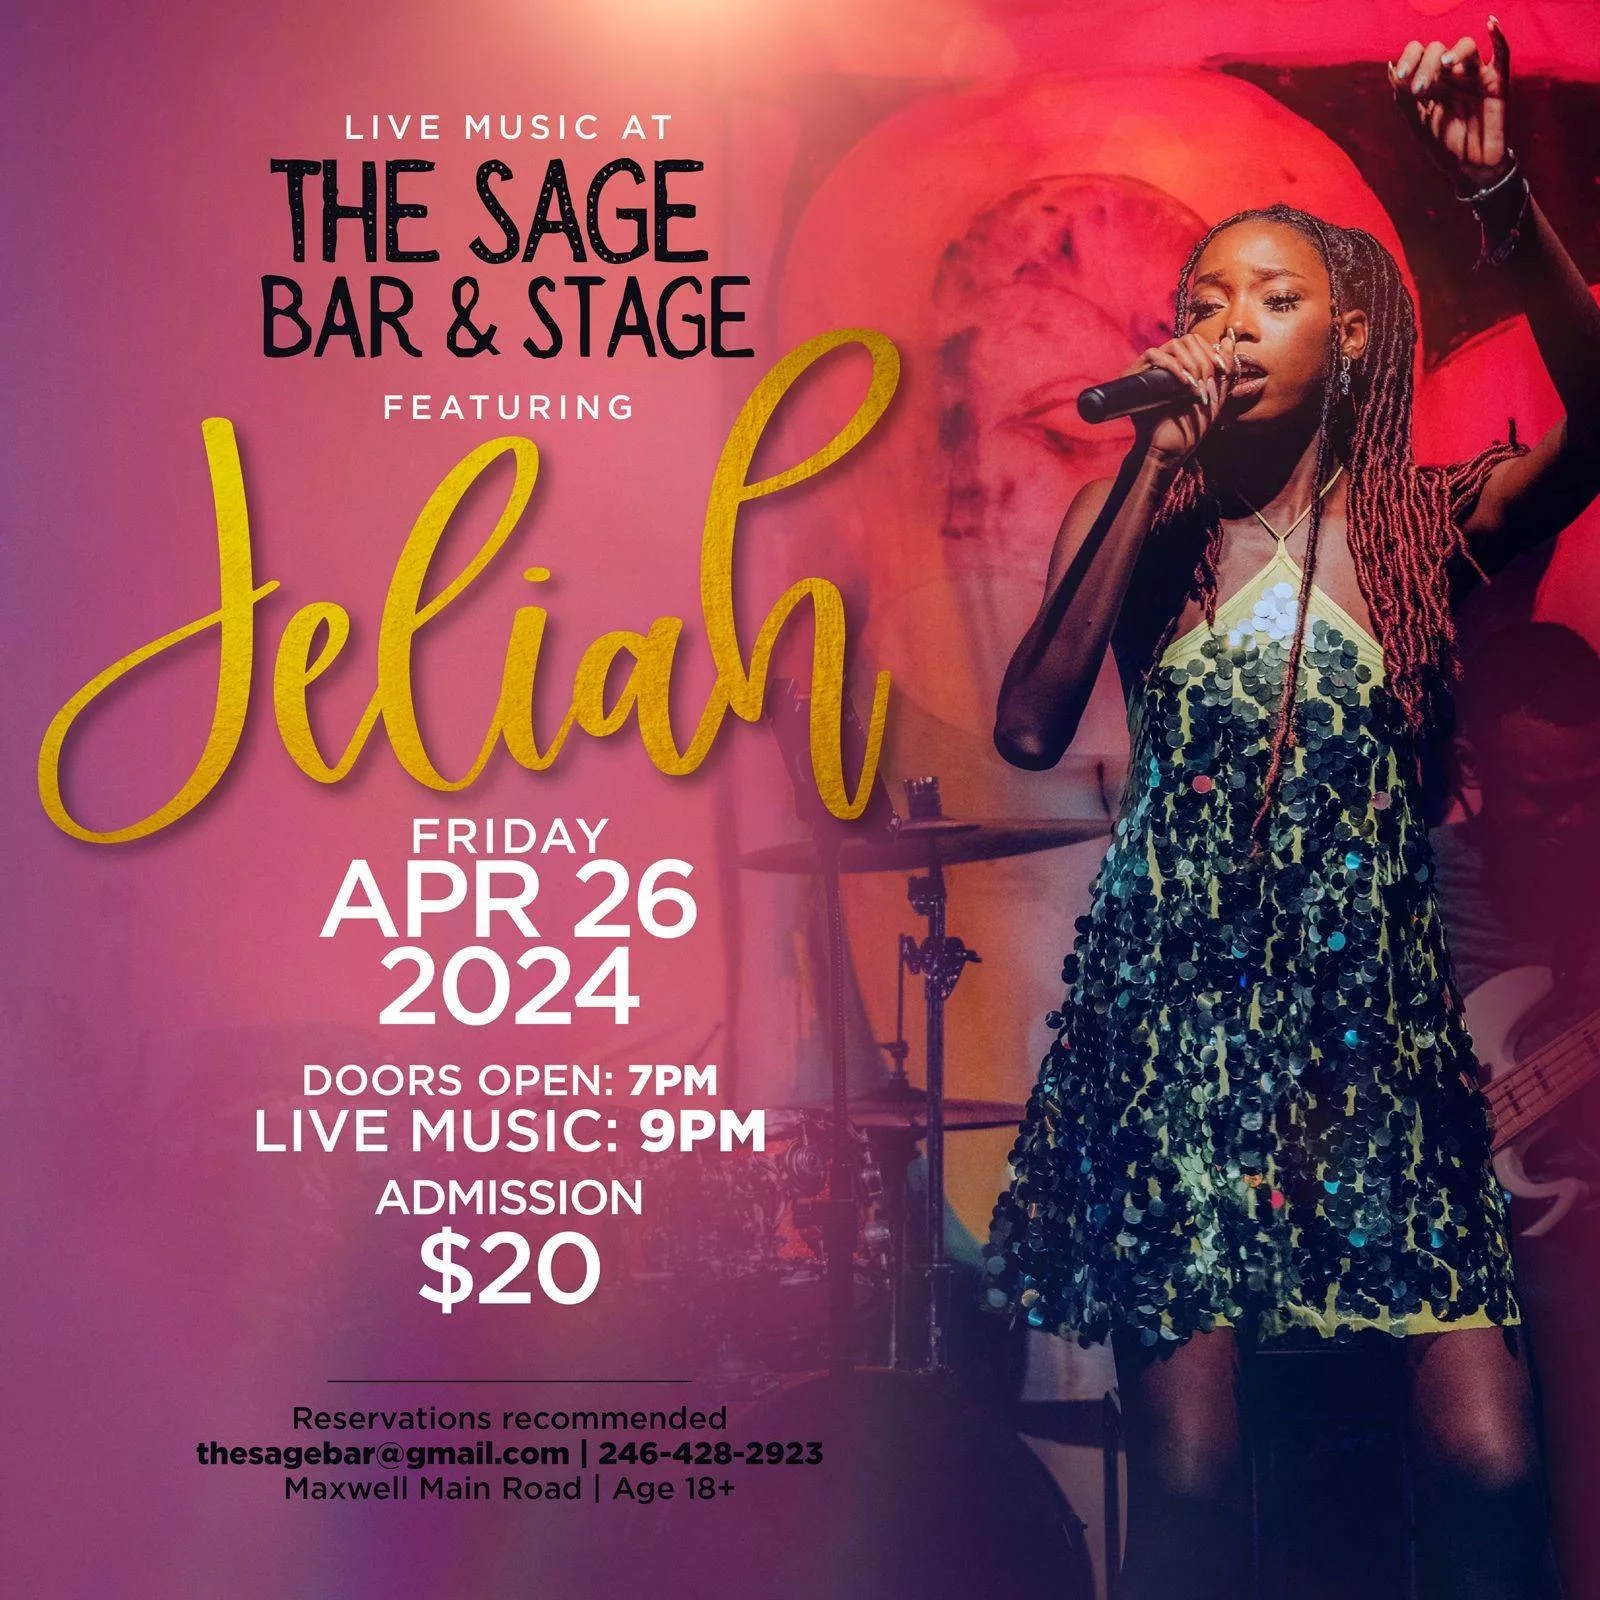 Jeliah - Singer - Live Music - Barbados